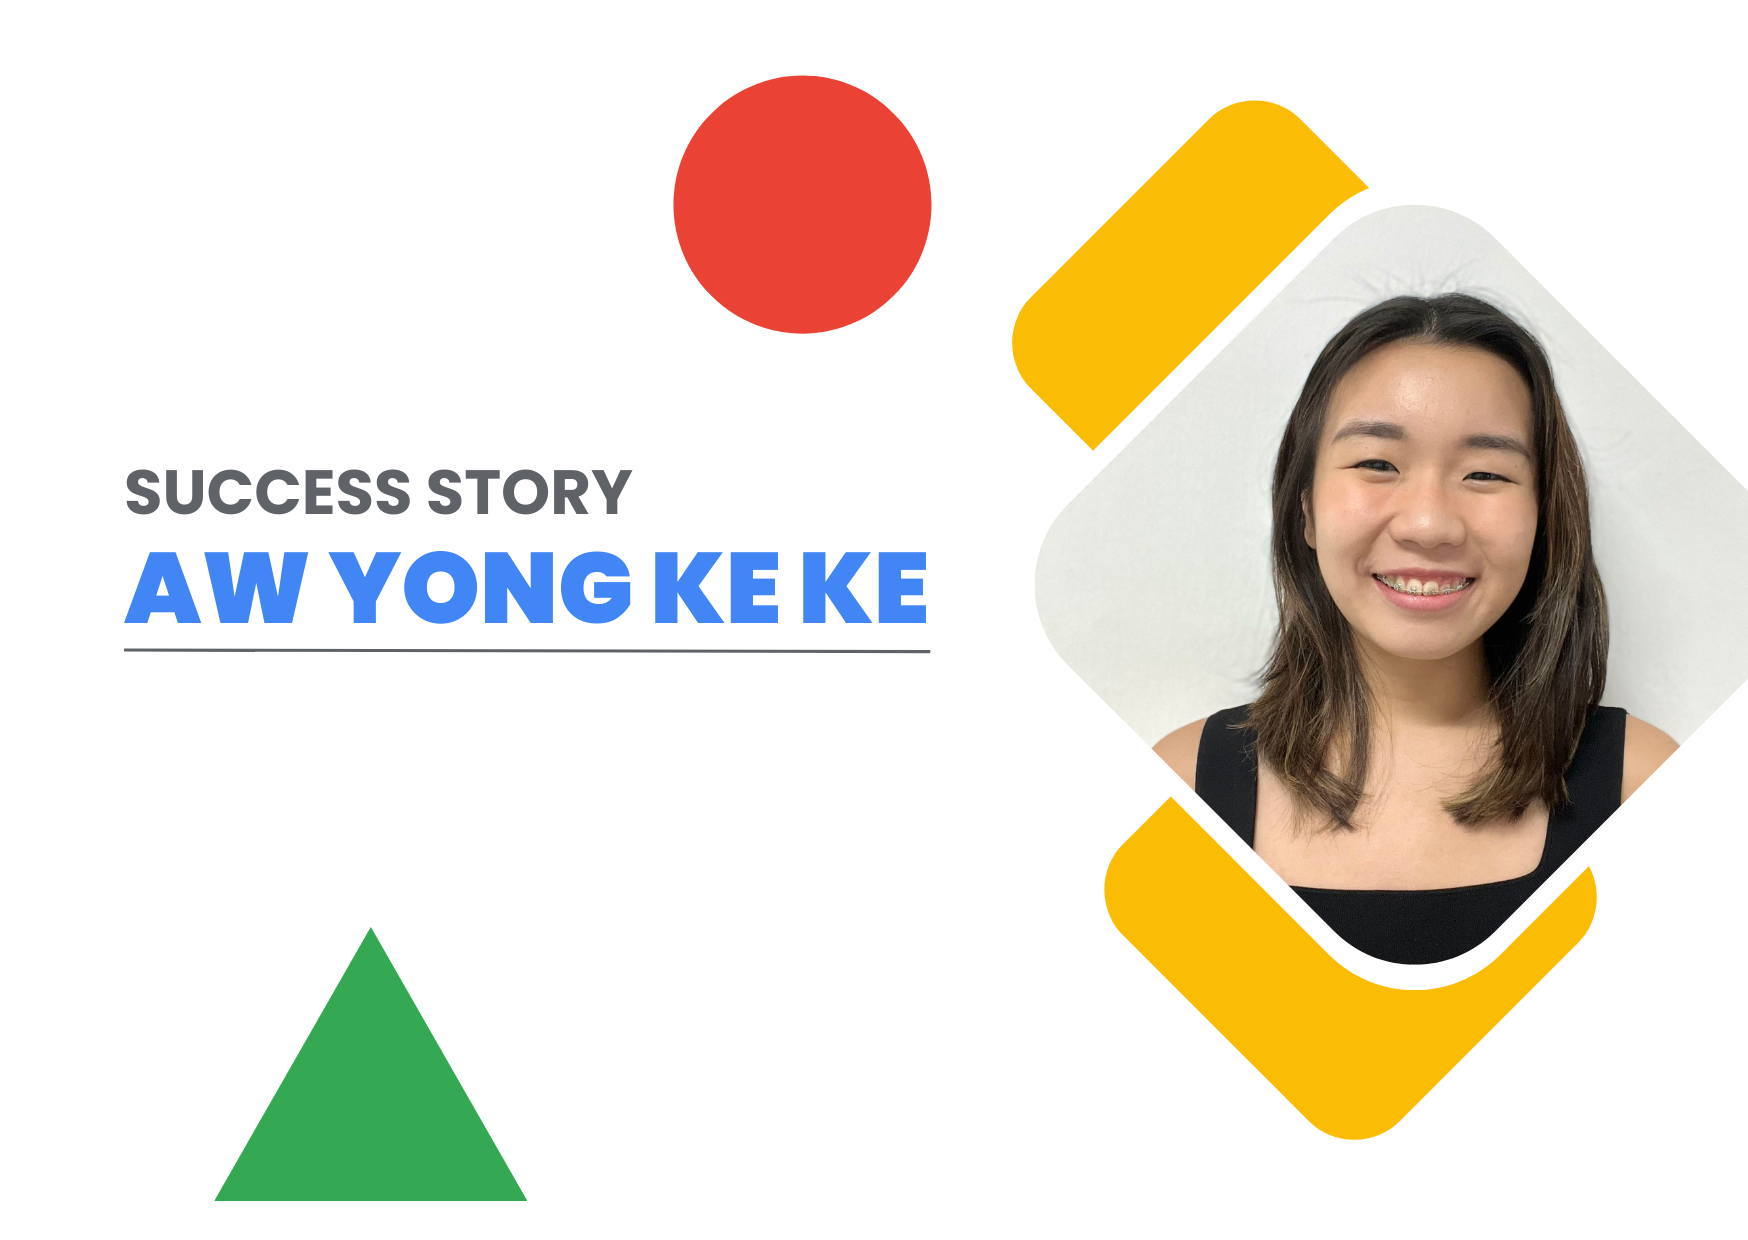 Success Story: Aw Yong Ke Ke